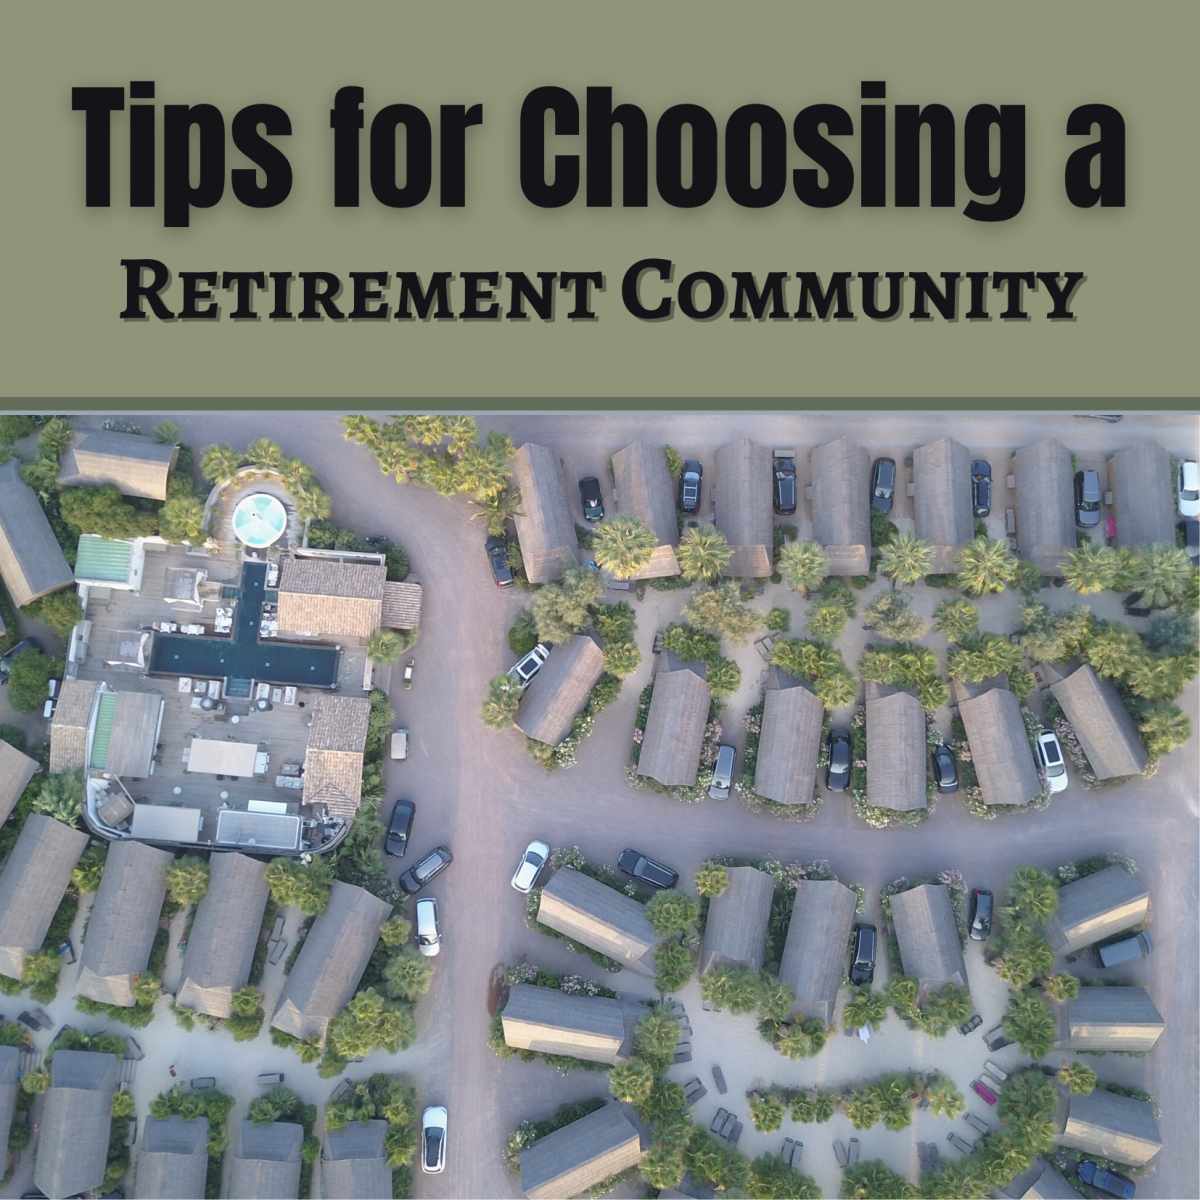 10 Tips for Choosing a Retirement Community